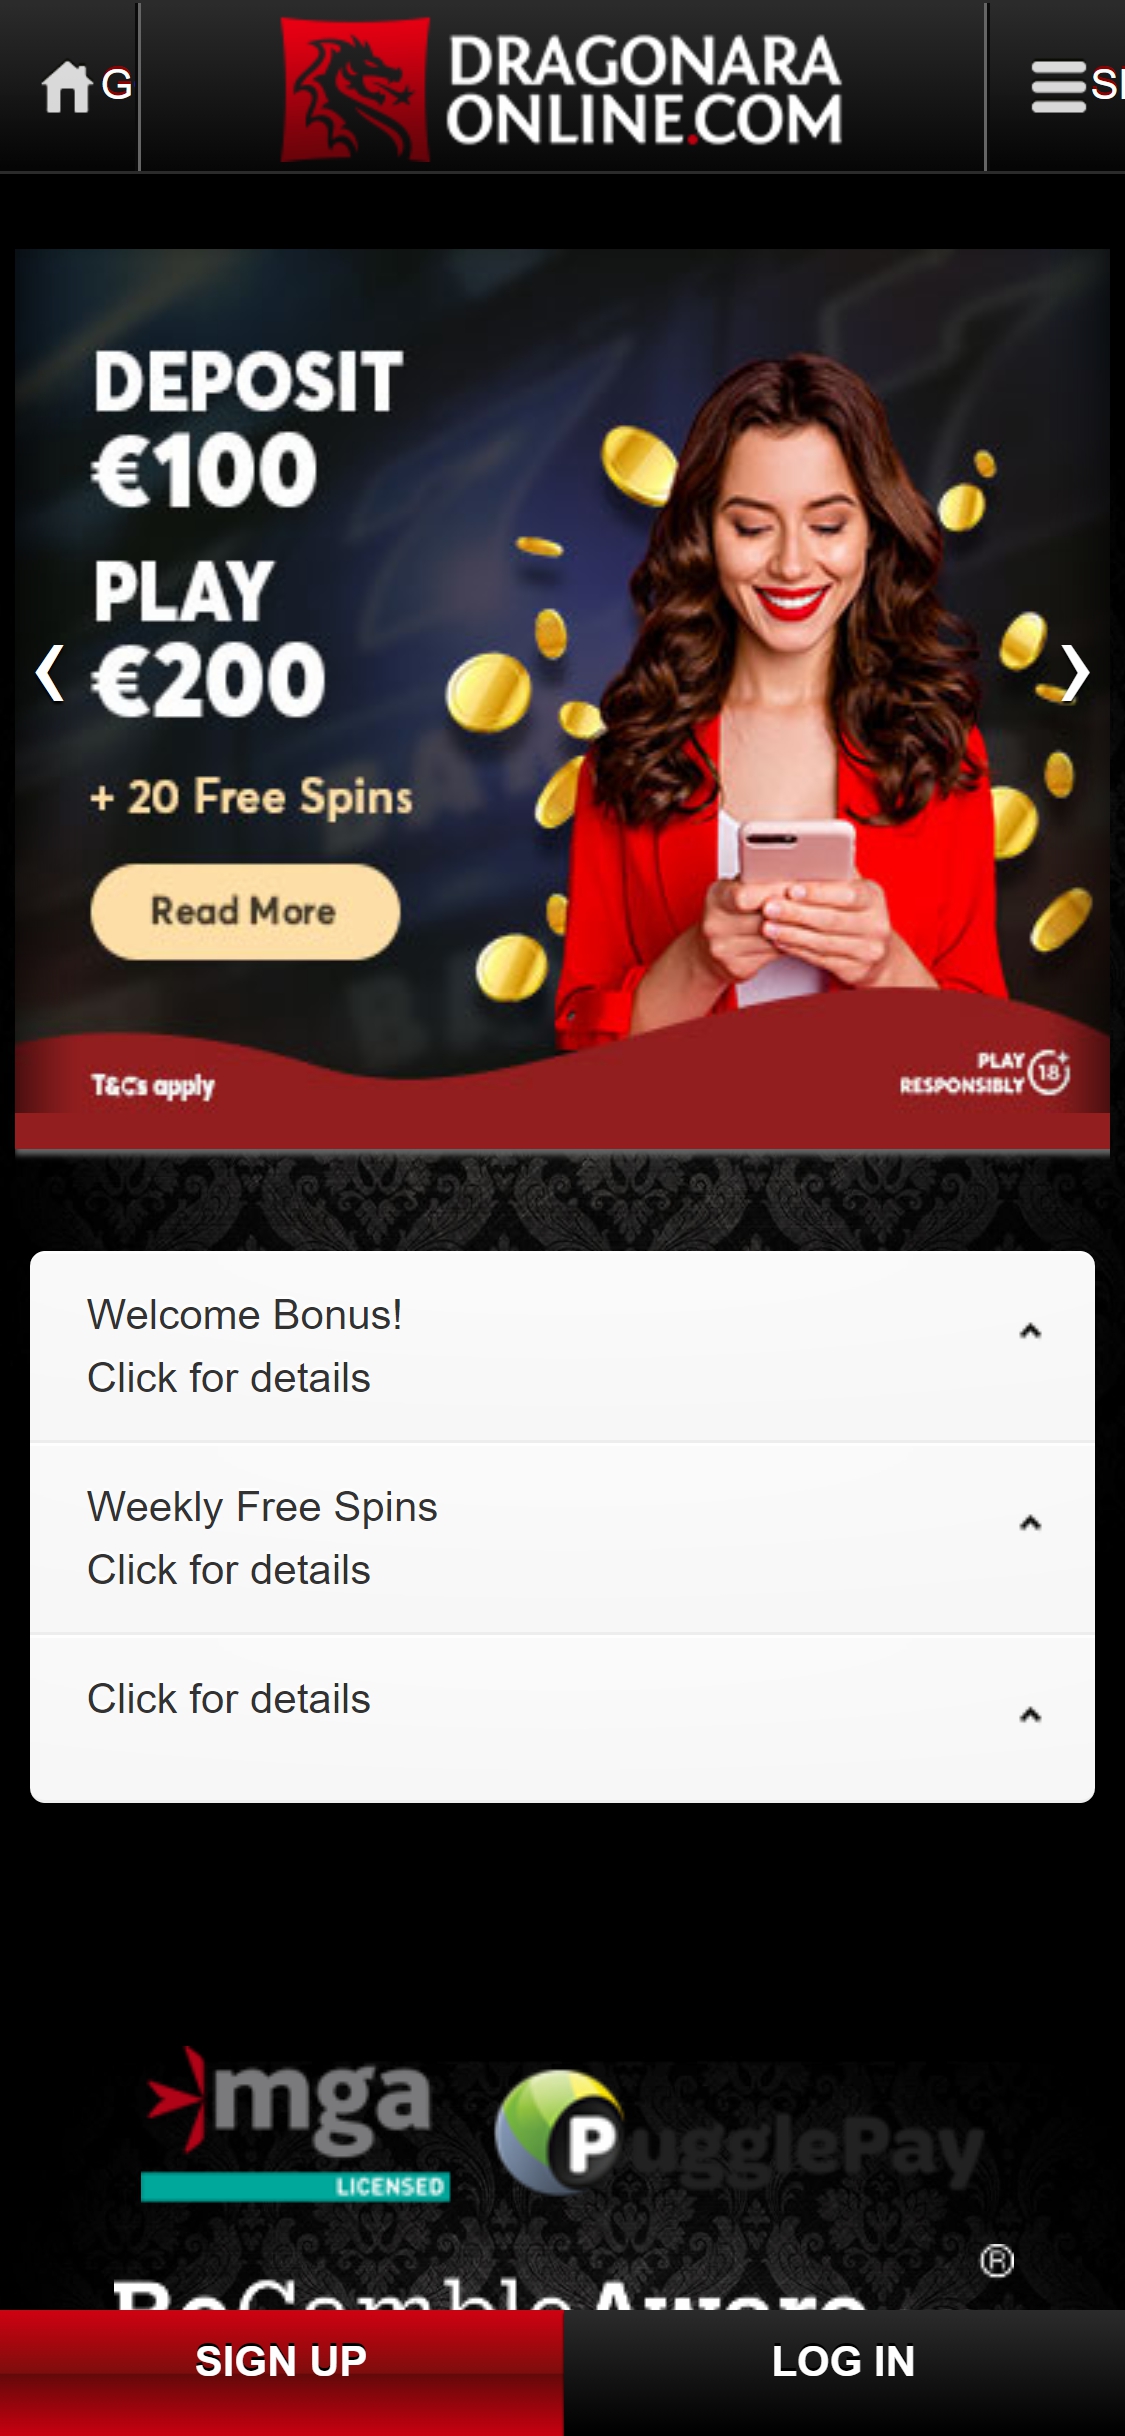 Dragonara Casino Mobile No Deposit Bonus Review